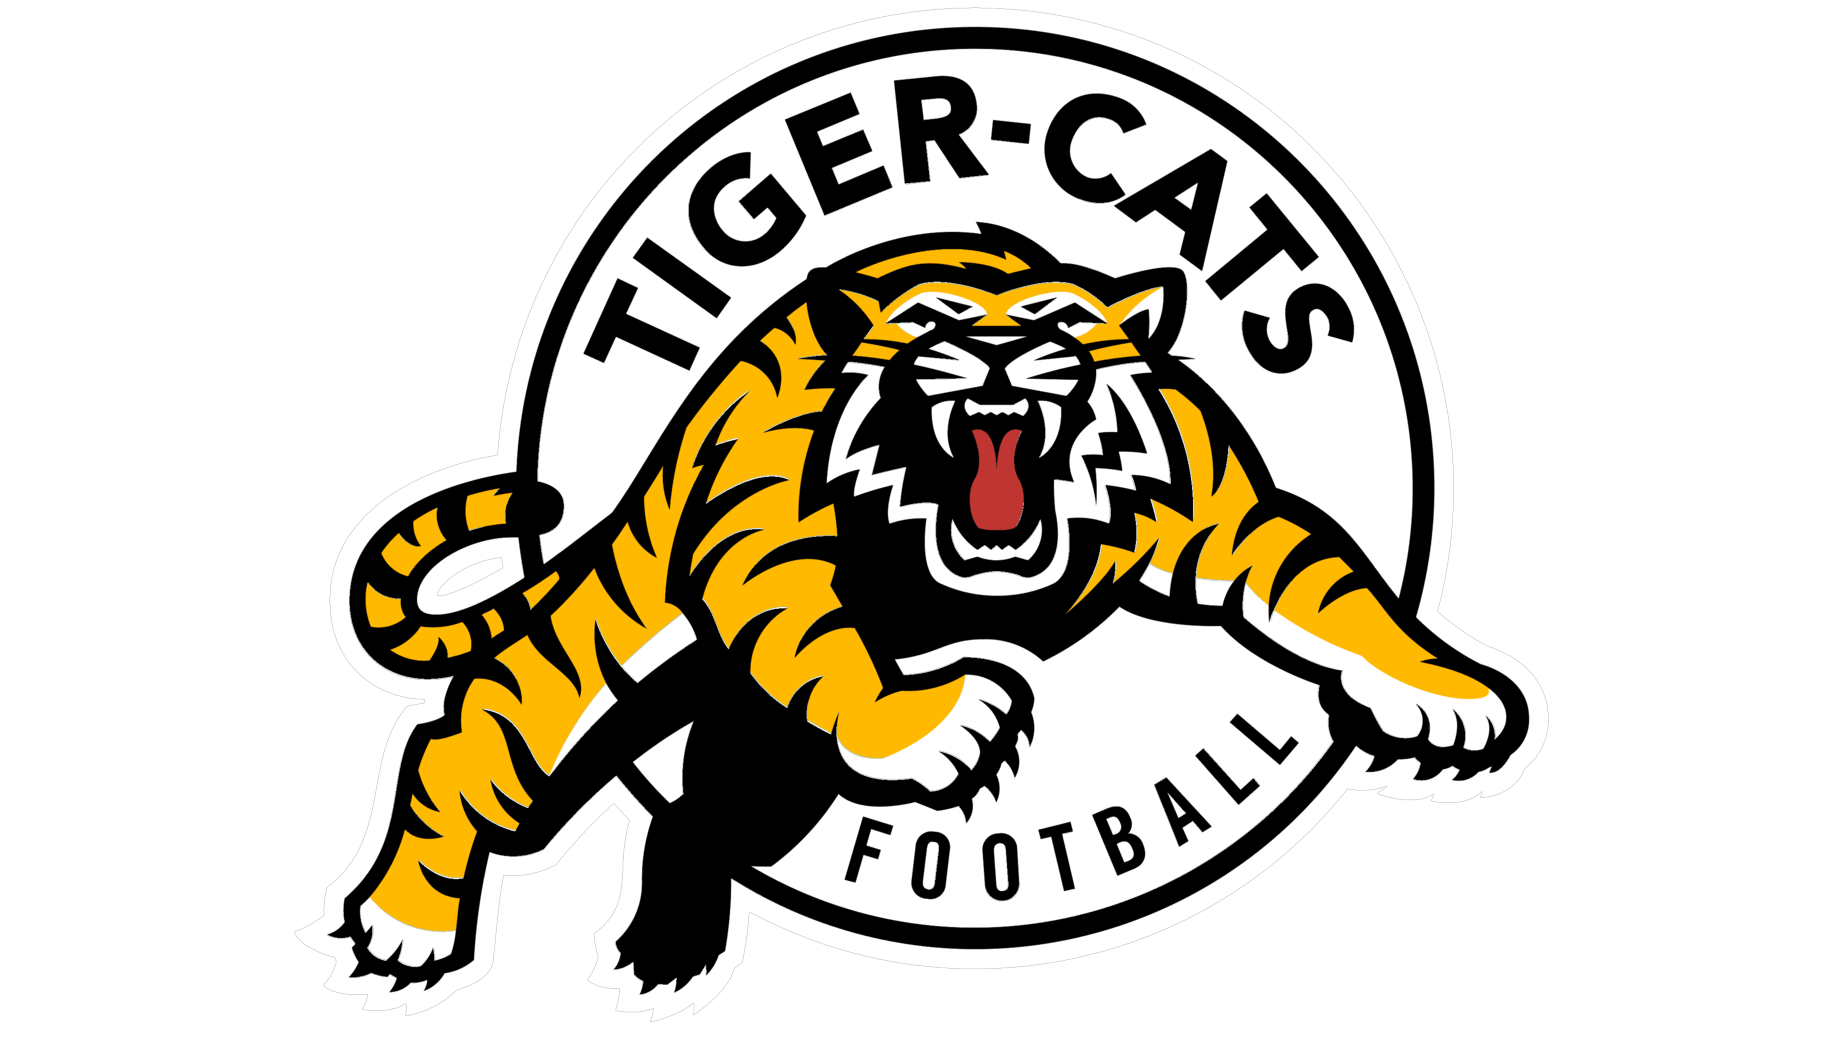 Hamilton tiger cats logo